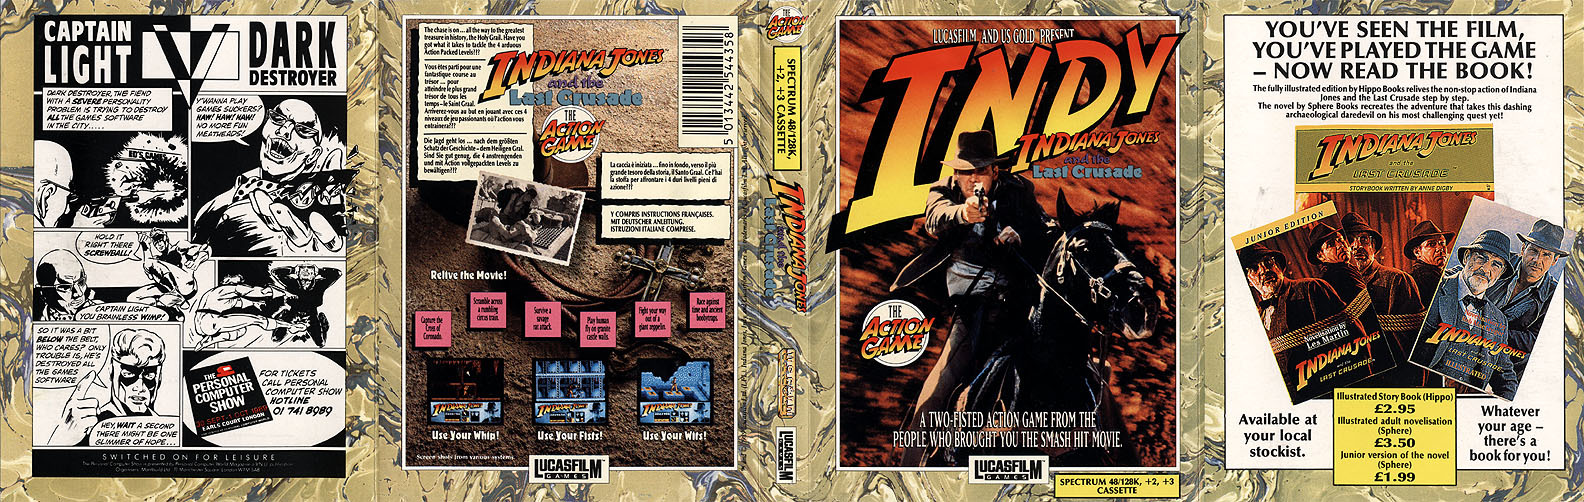 Indiana Jones and the Last Crusade, постер № 1